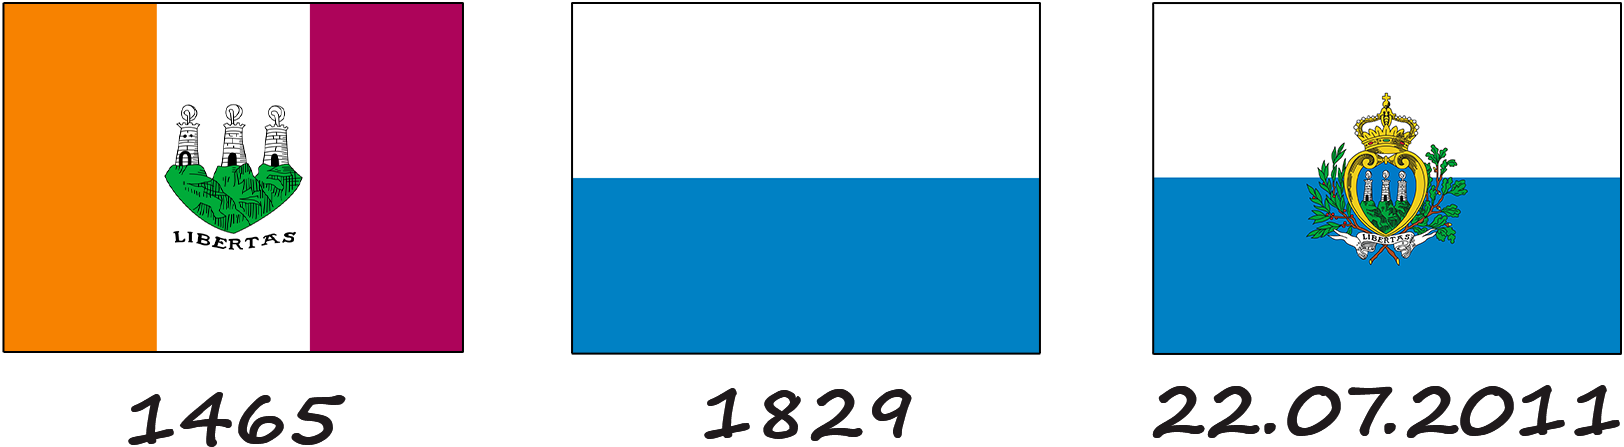 History of the San Marino flag